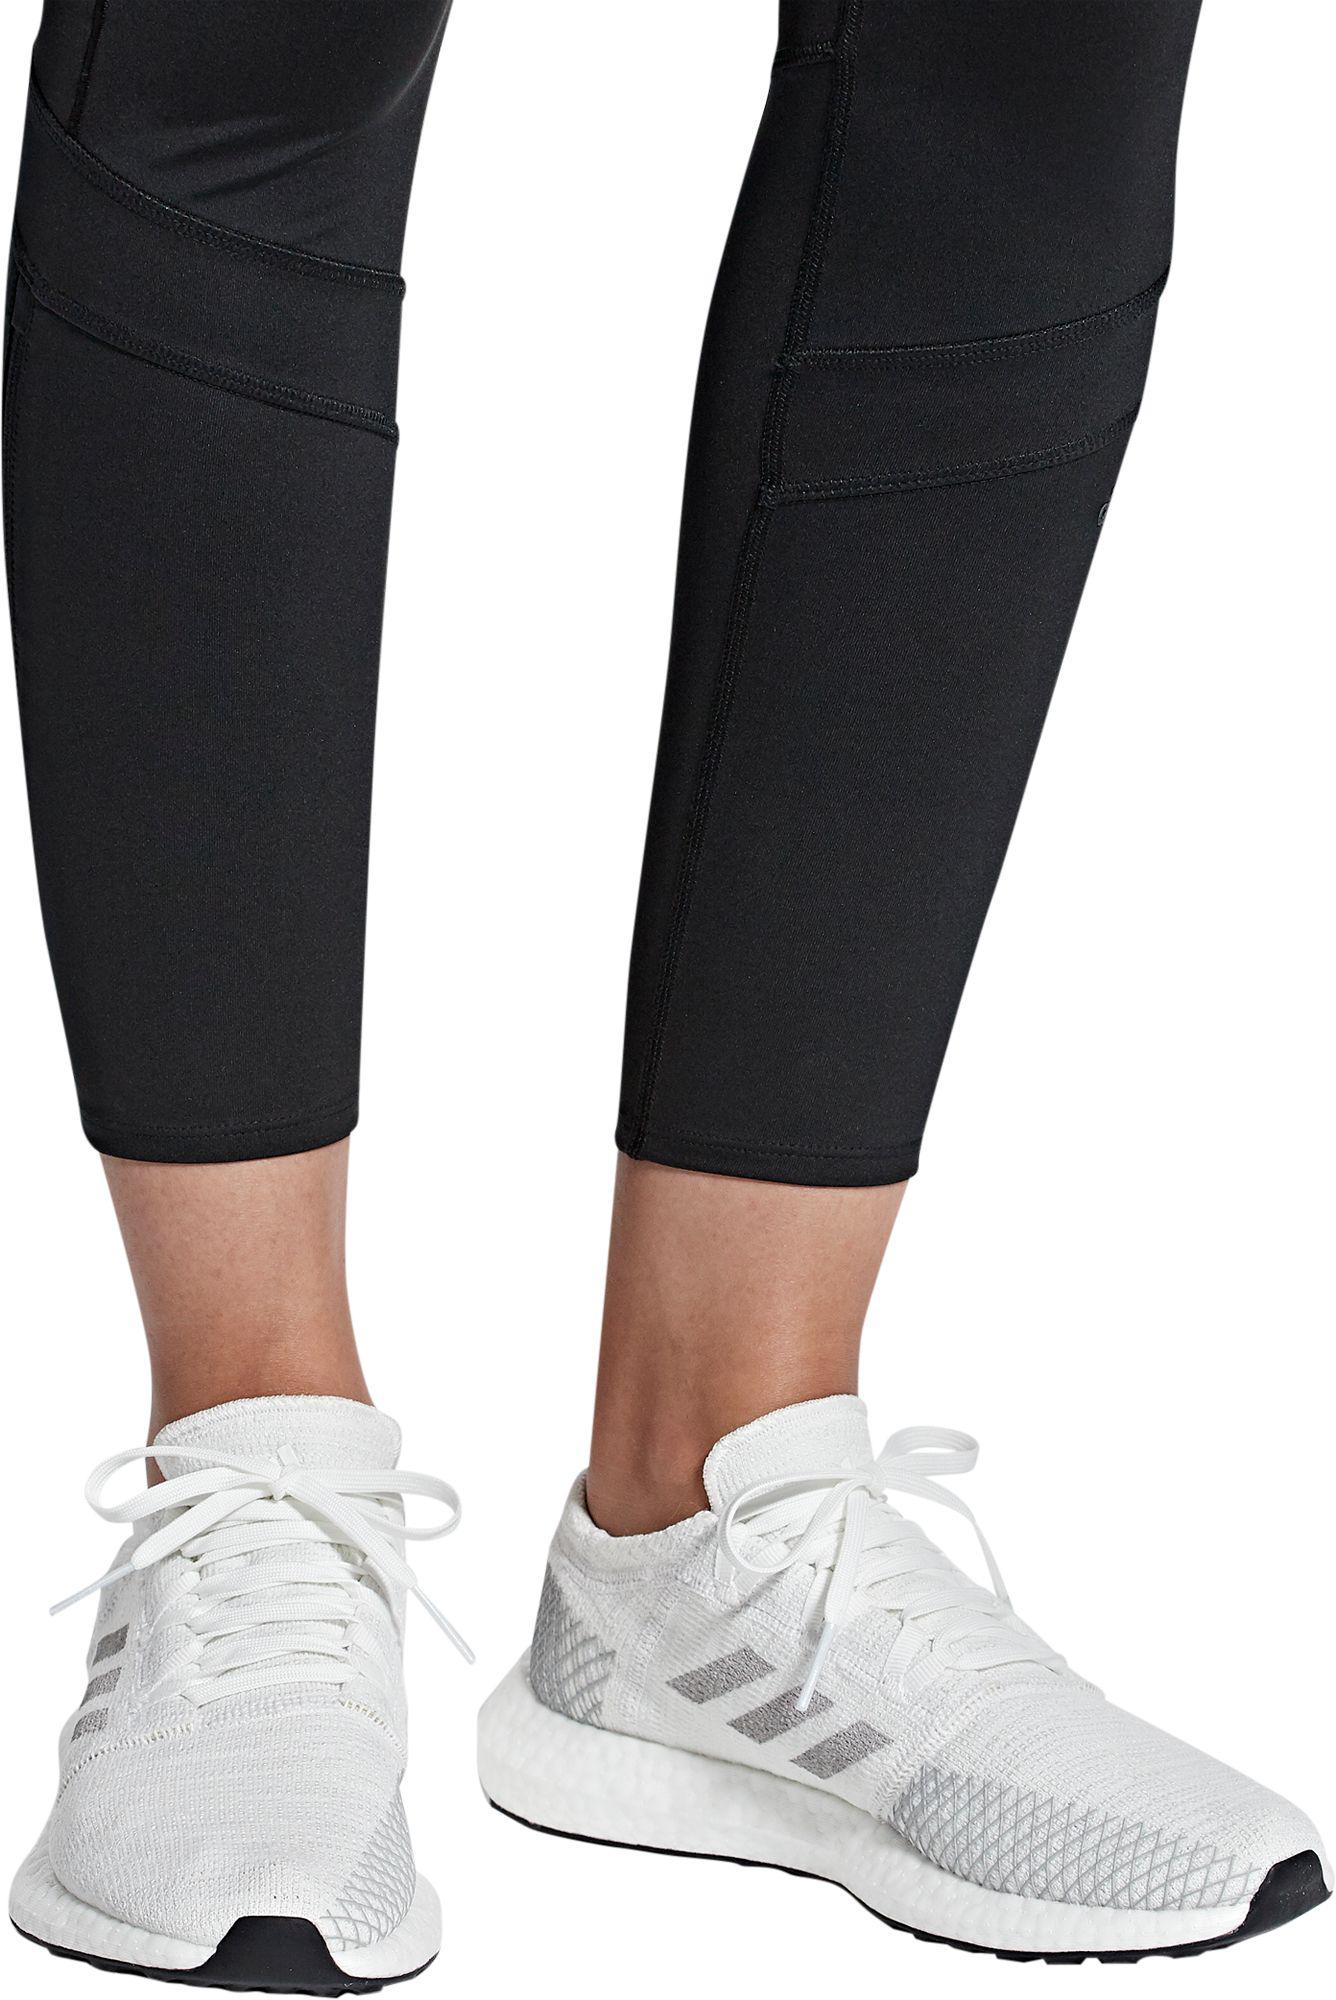 adidas women's pureboost go running shoes white